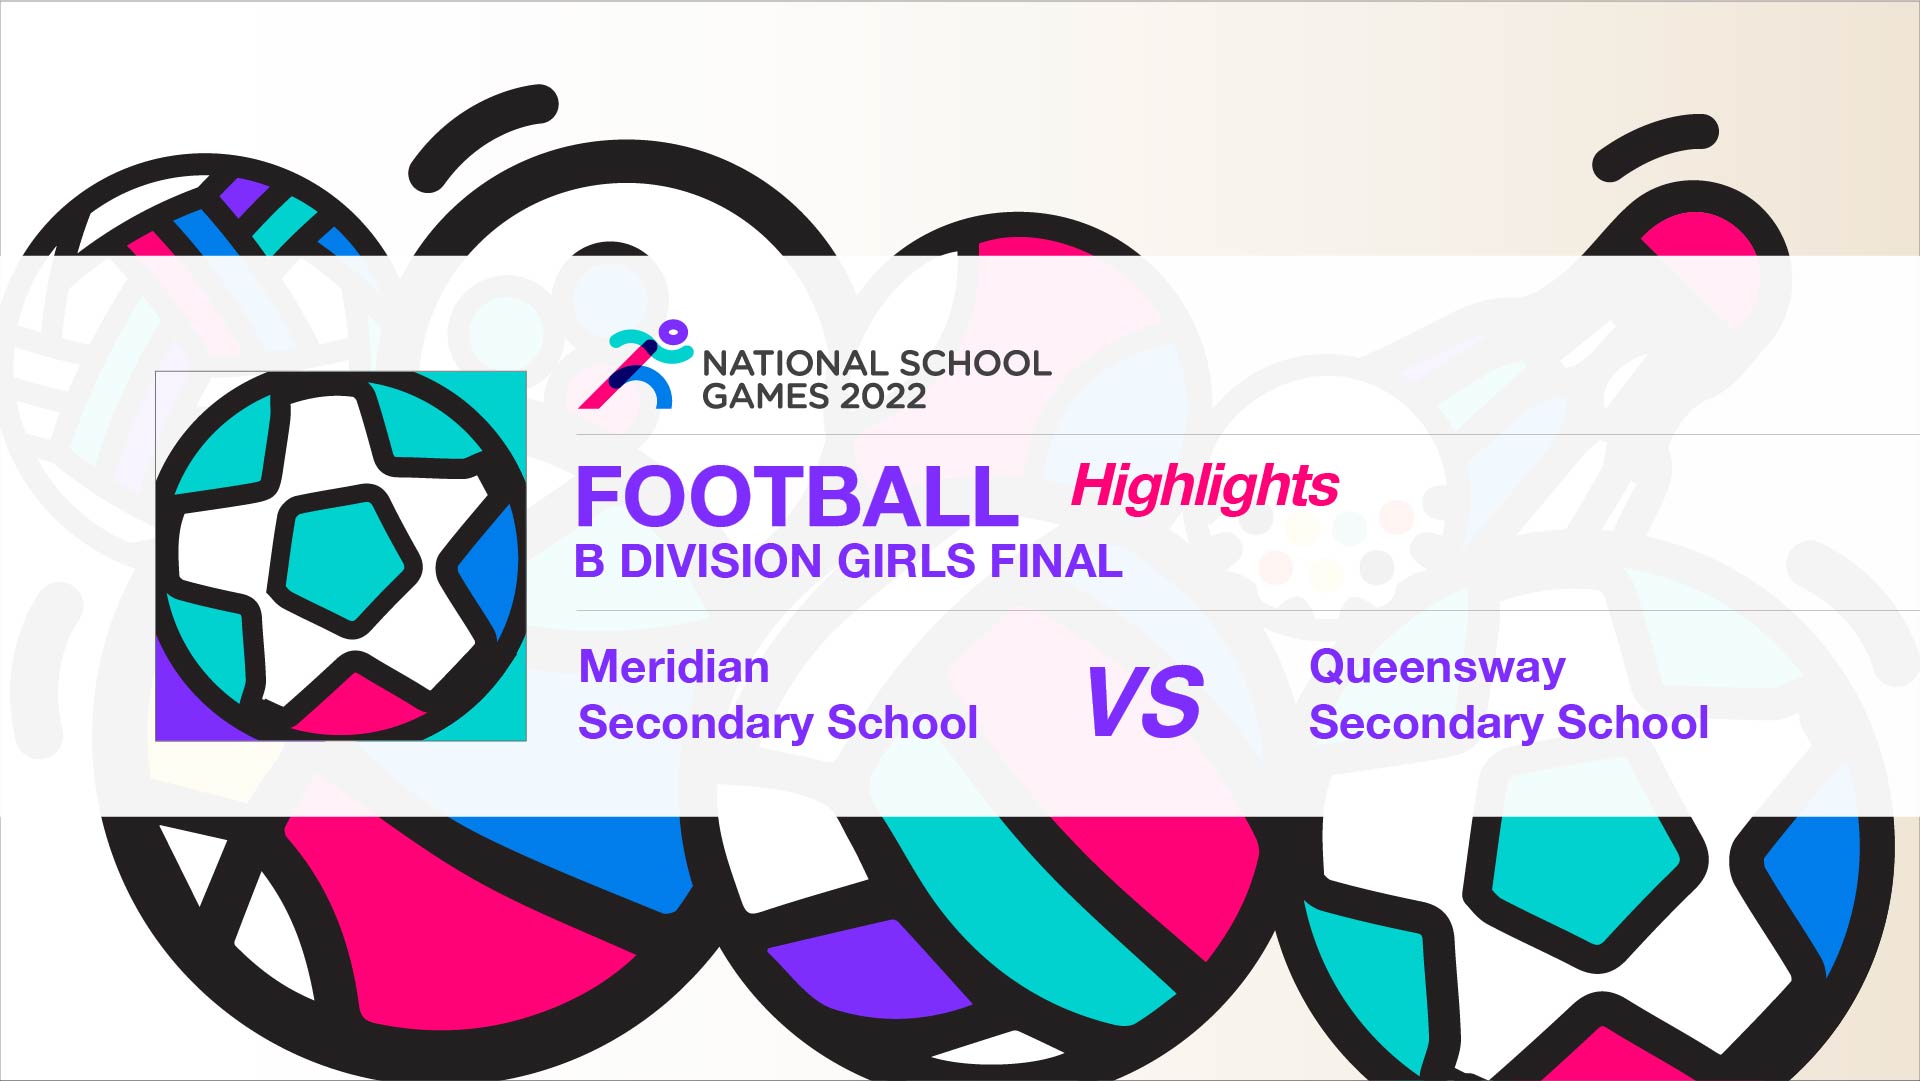 SSSC Football B Division Girls Final | Meridian Secondary School vs Queensway Secondary School - Highlights